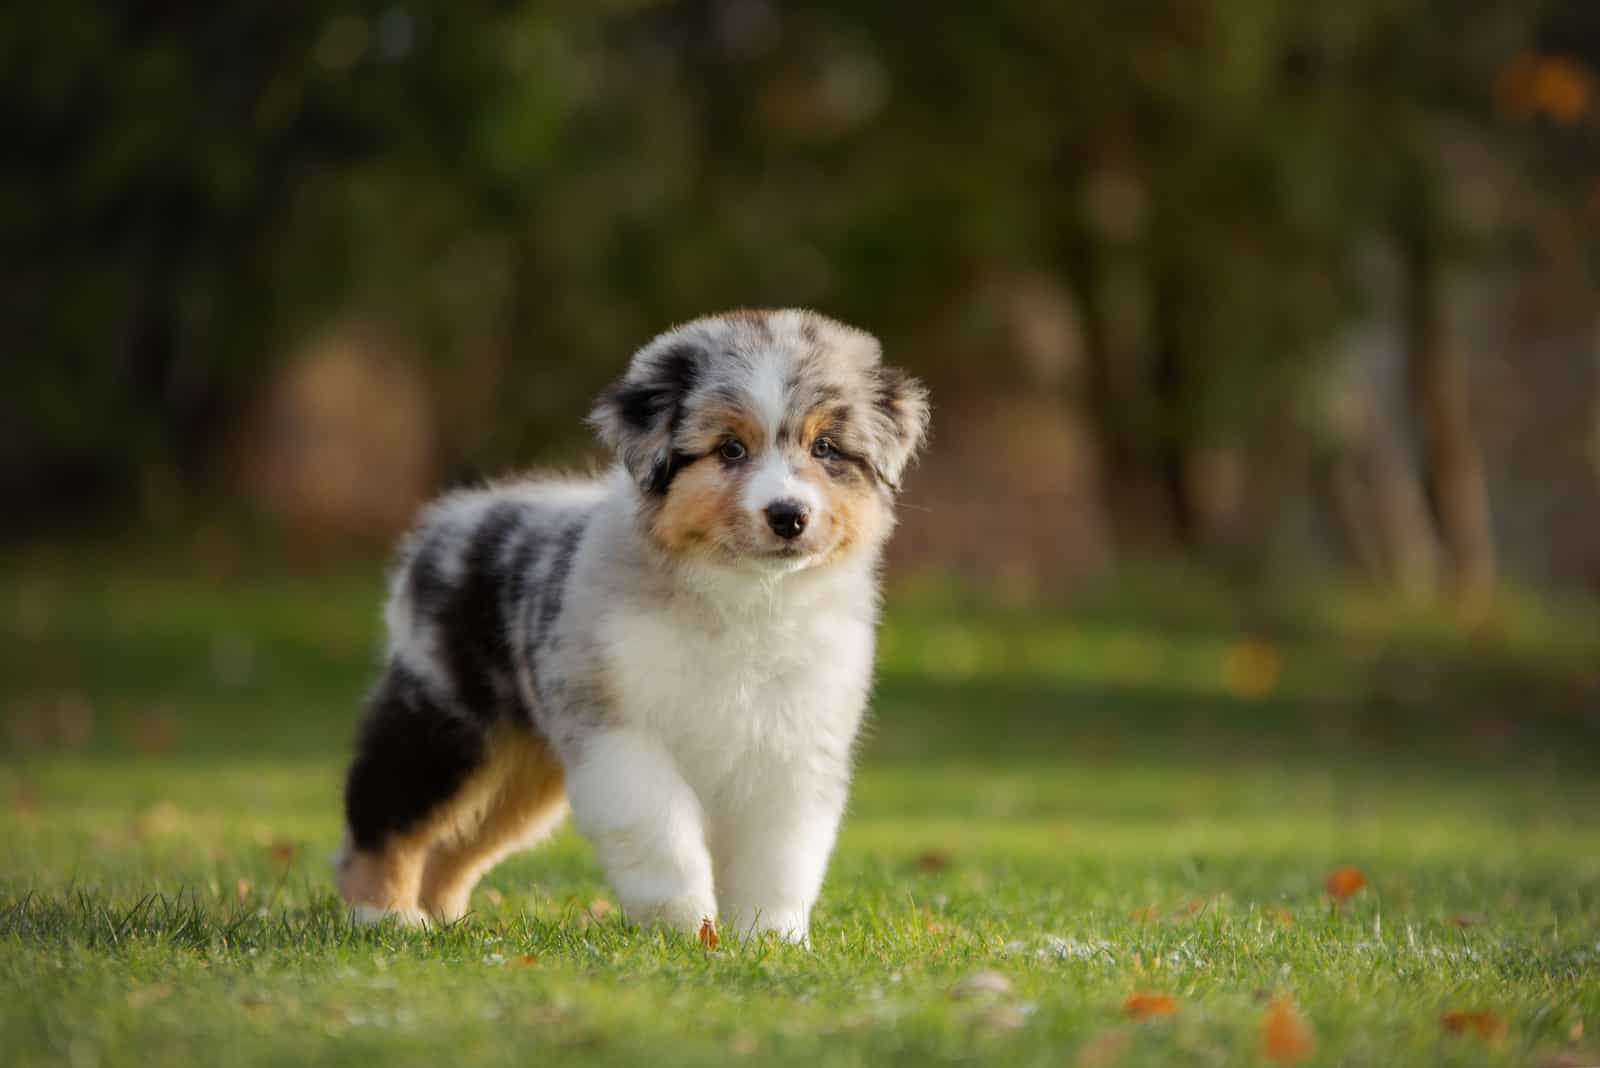 Australian Shepherd puppy standing on grass